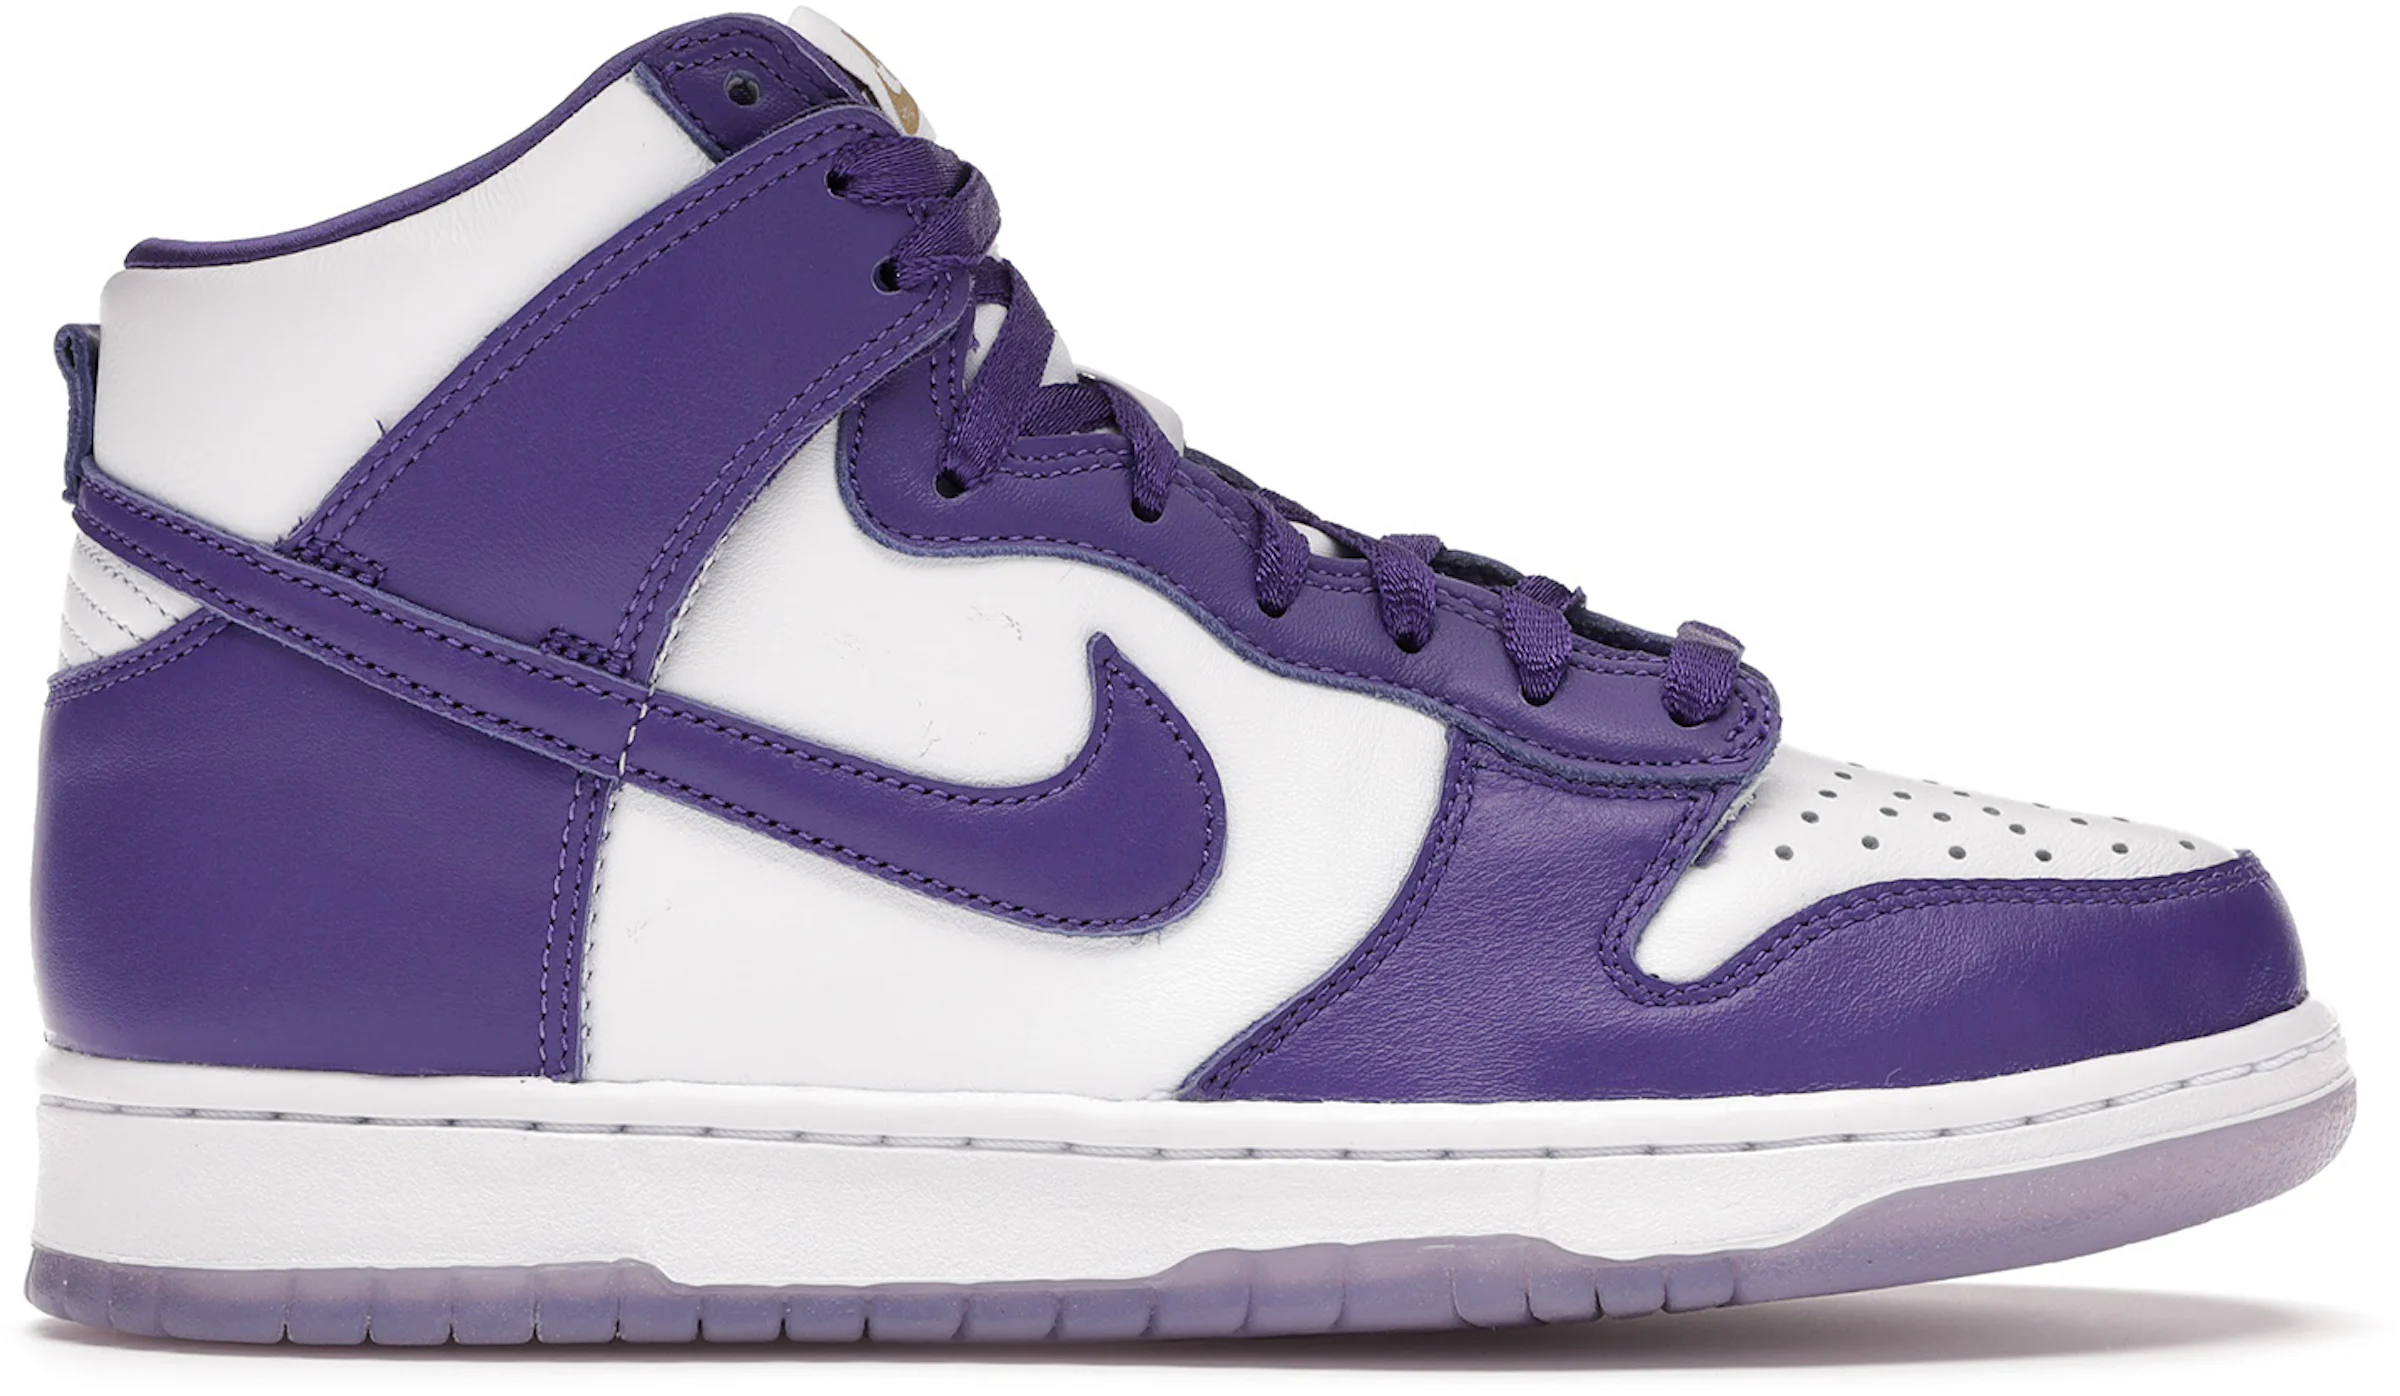 https://images.stockx.com/images/Nike-Dunk-High-SP-Varsity-Purple-W-Product.jpg?fit=fill&bg=FFFFFF&w=1200&h=857&fm=webp&auto=compress&dpr=2&trim=color&updated_at=1609445289&q=60